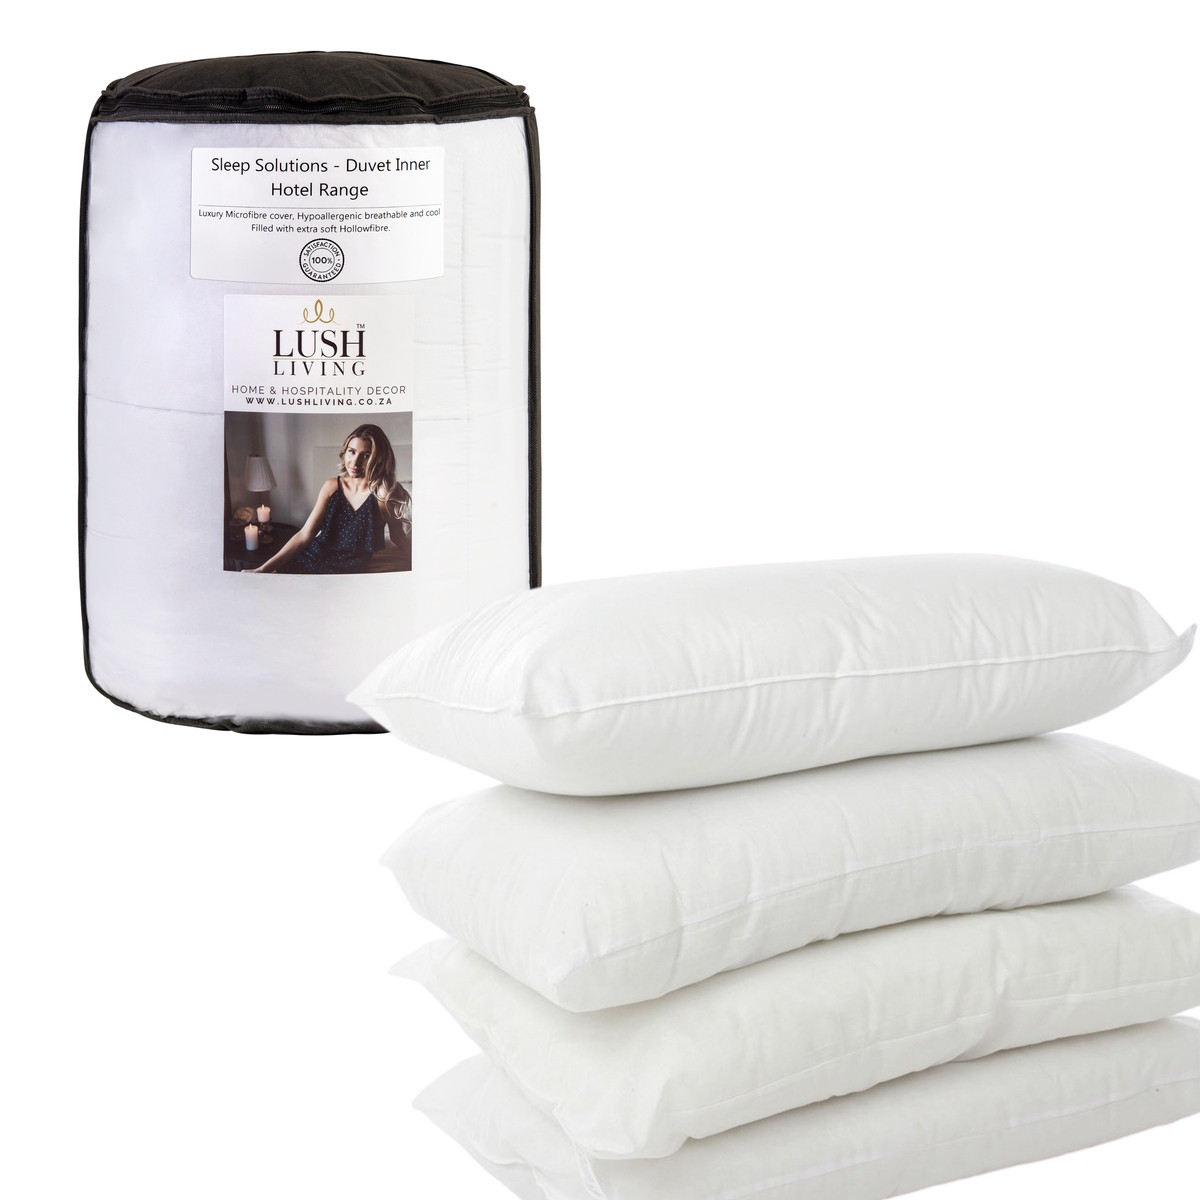 Luscious Living - Pillows - Duvet Inner - Bedding Set - 5 Piece - Value Bundle - Bounce Fibre